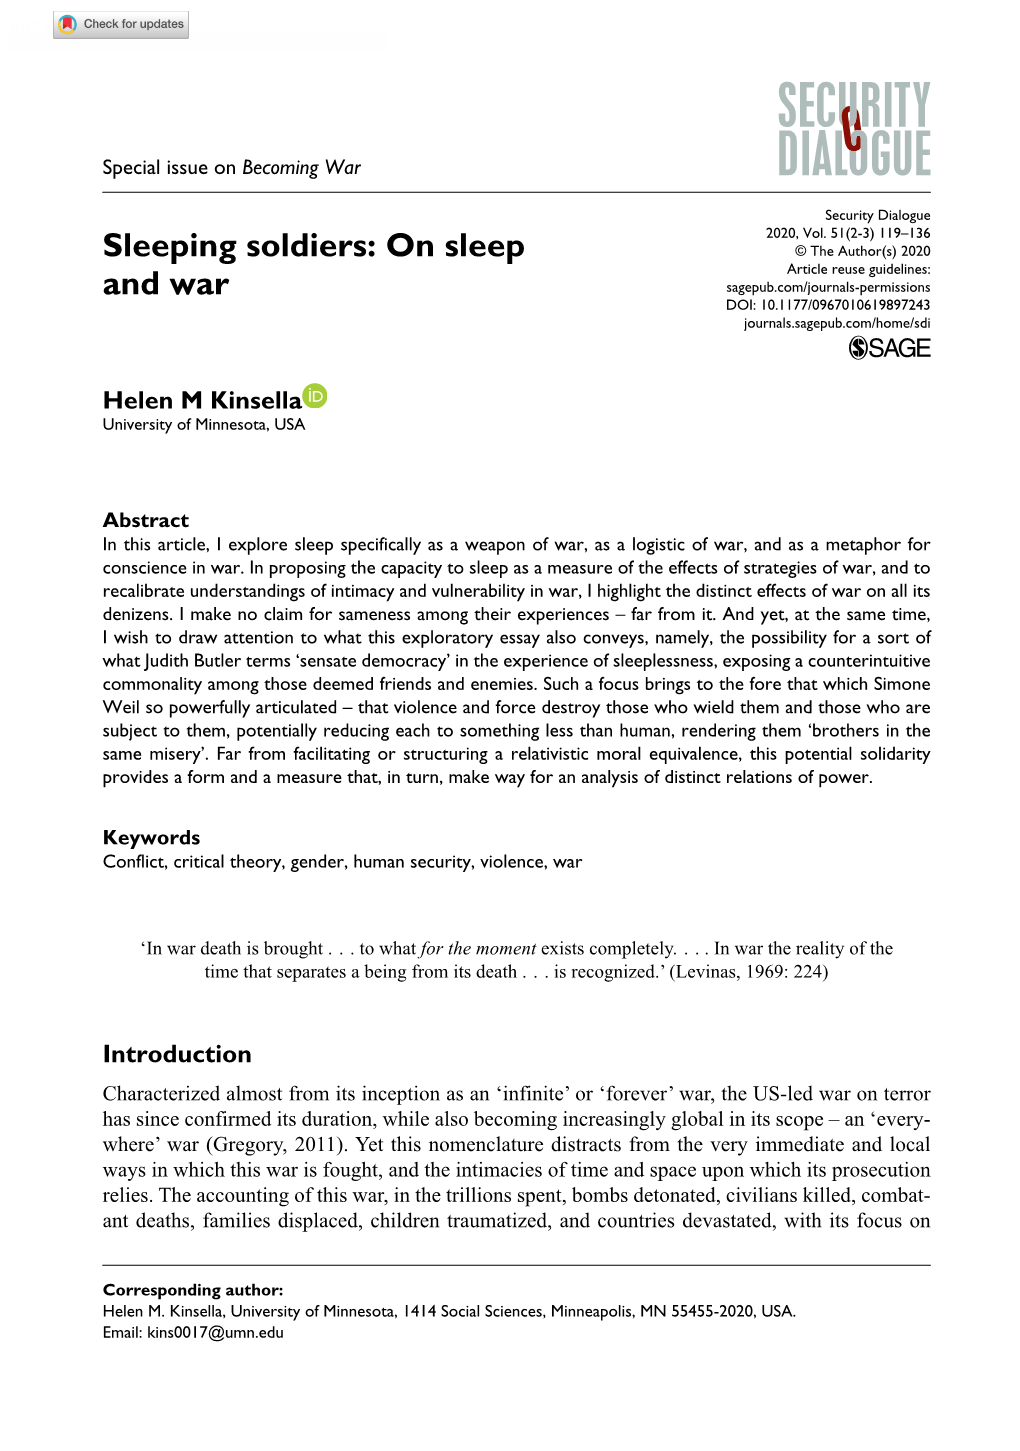 Sleeping Soldiers: on Sleep And